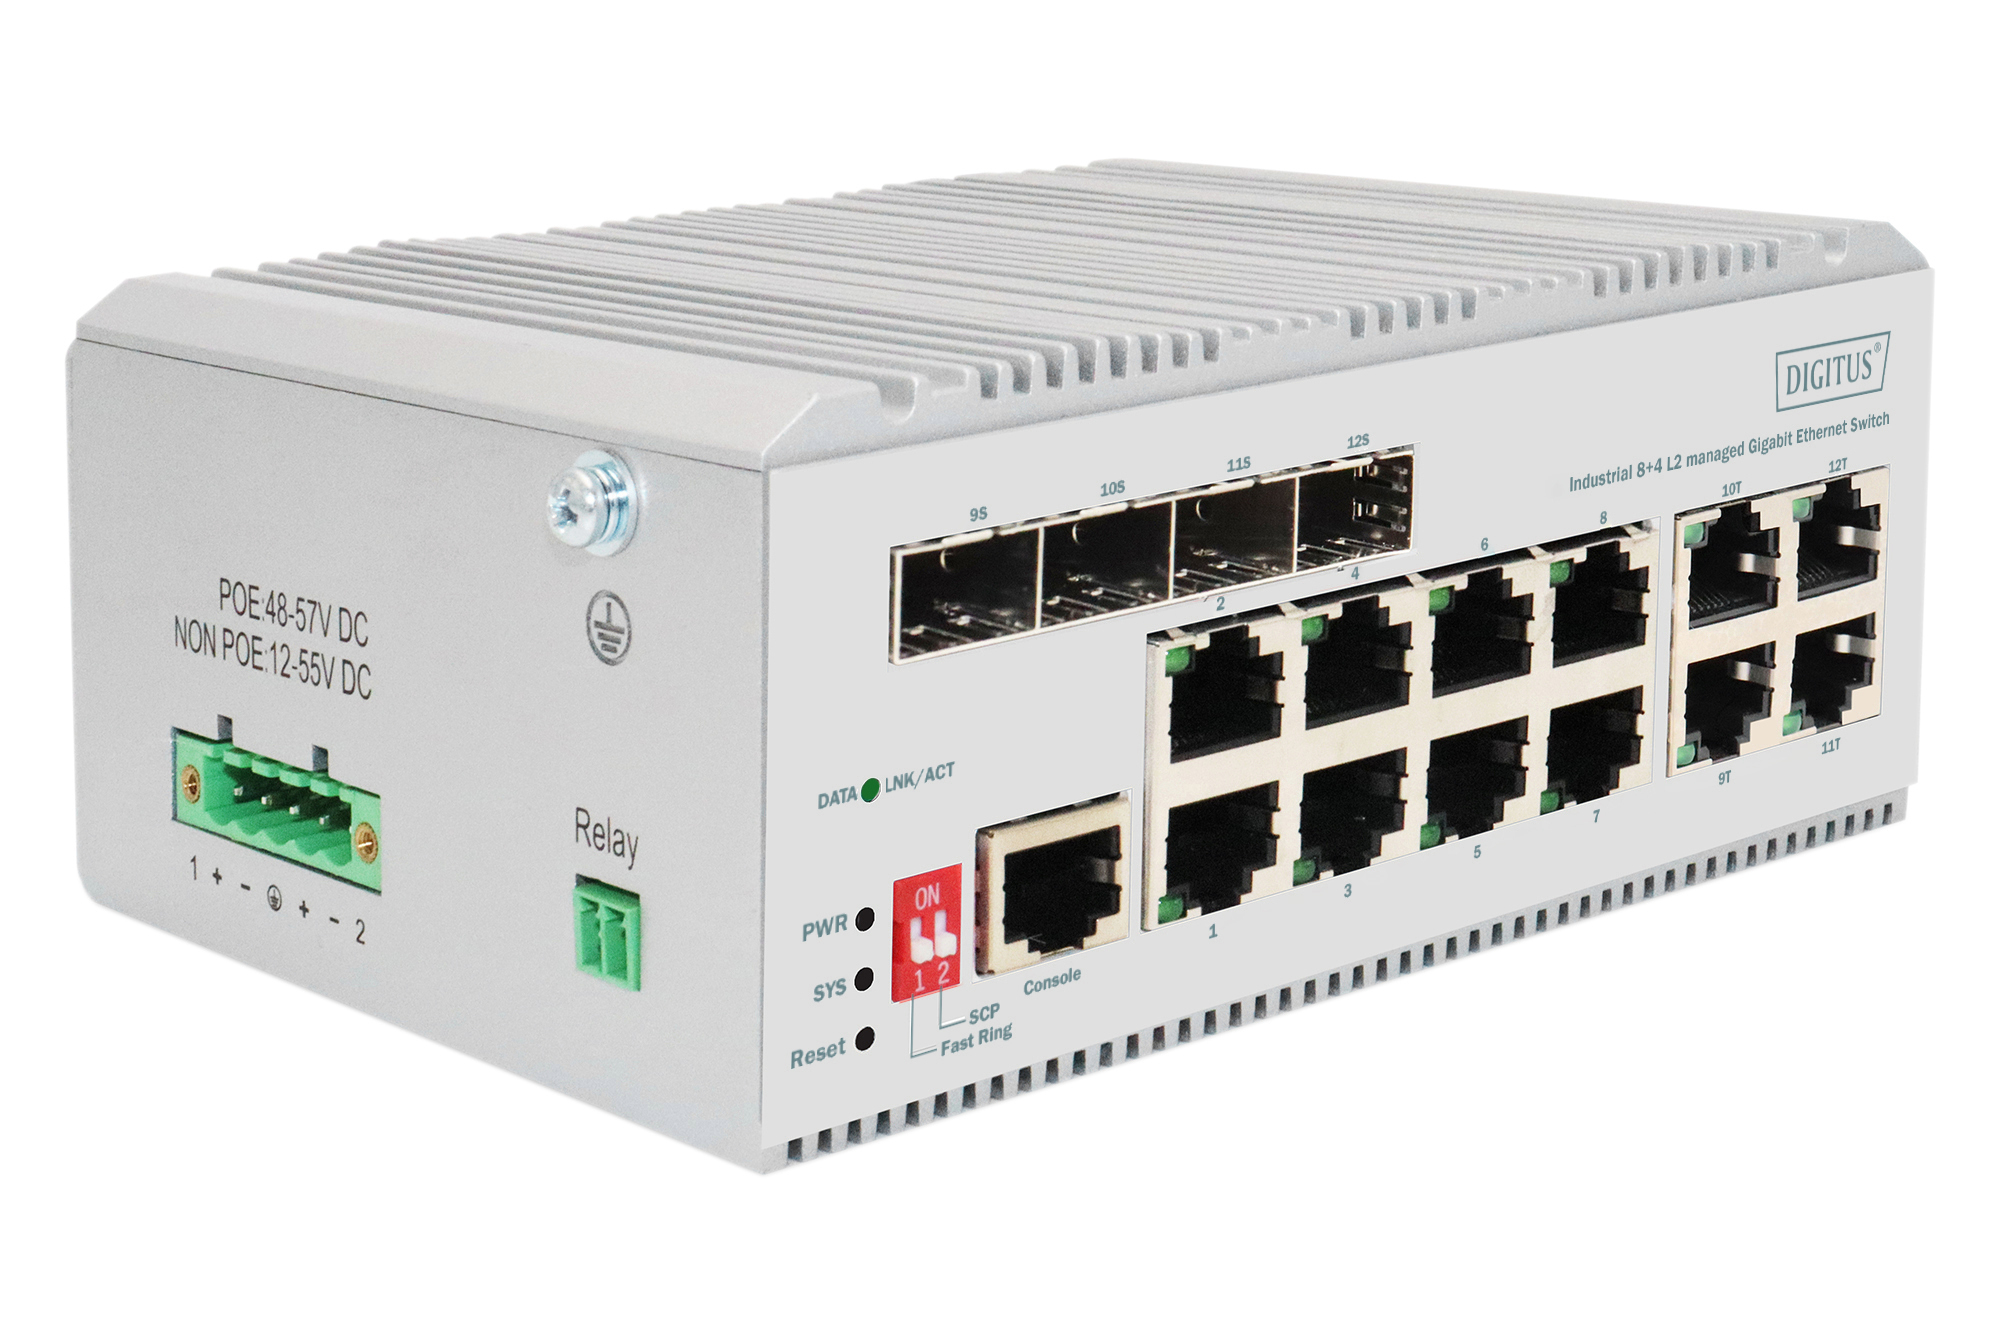 DN-651145 DIGITUS Industrial 8+4 L2 managed Gigabit Ethernet Switch